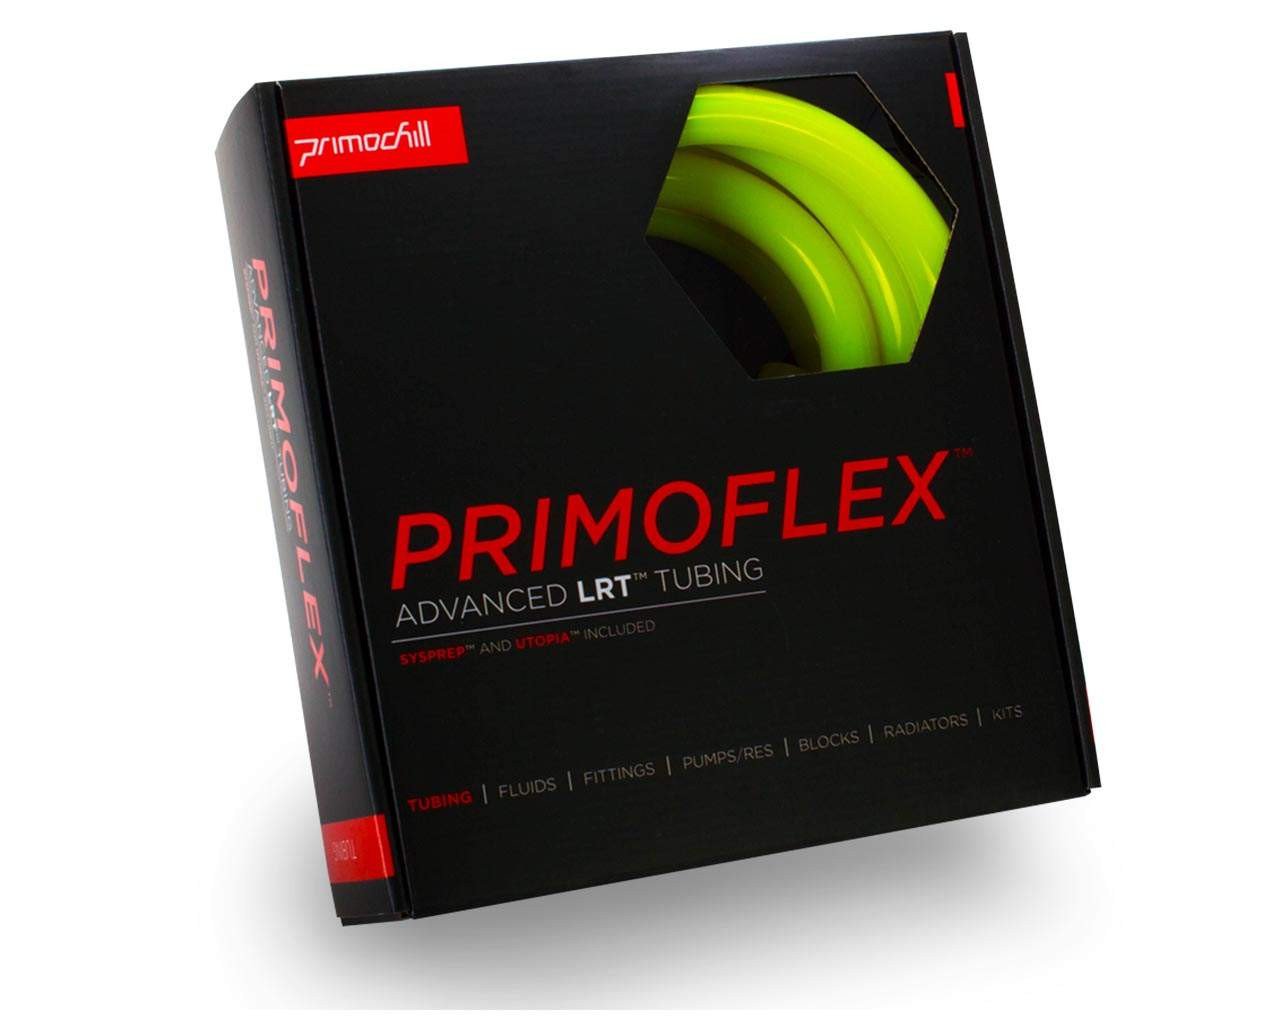 PrimoFlex Advanced LRT Soft Flexible Tubing -1/2in.ID x 3/4in.OD, 10 feet - PrimoChill - KEEPING IT COOL Pearl UV Yellow